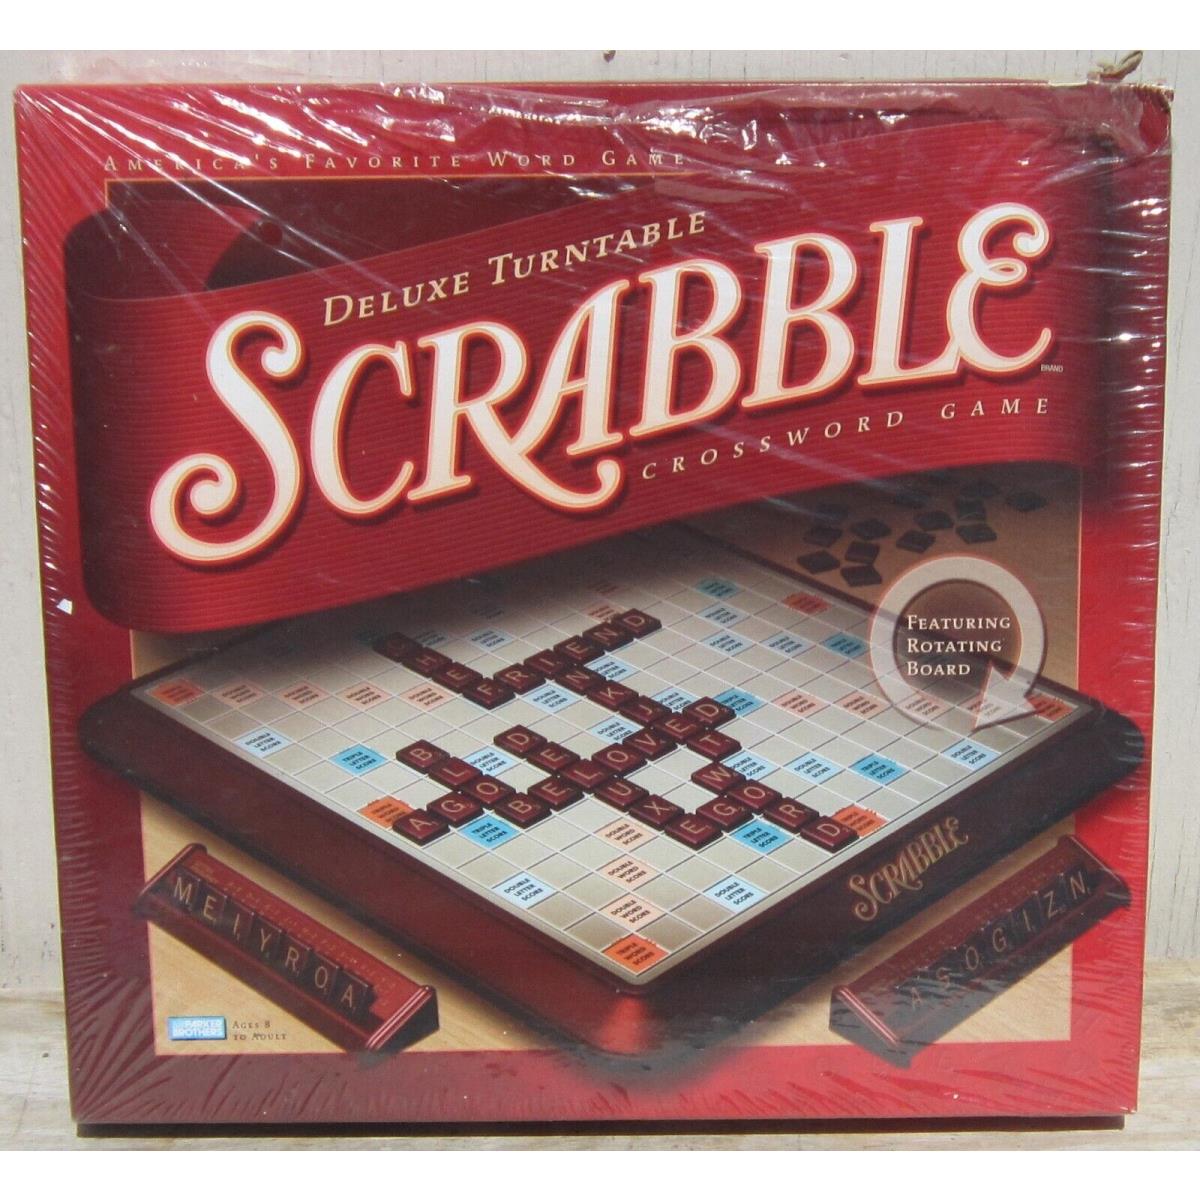 Deluxe Turntable Scrabble Crossword Game 2001 Hasbro W/damage